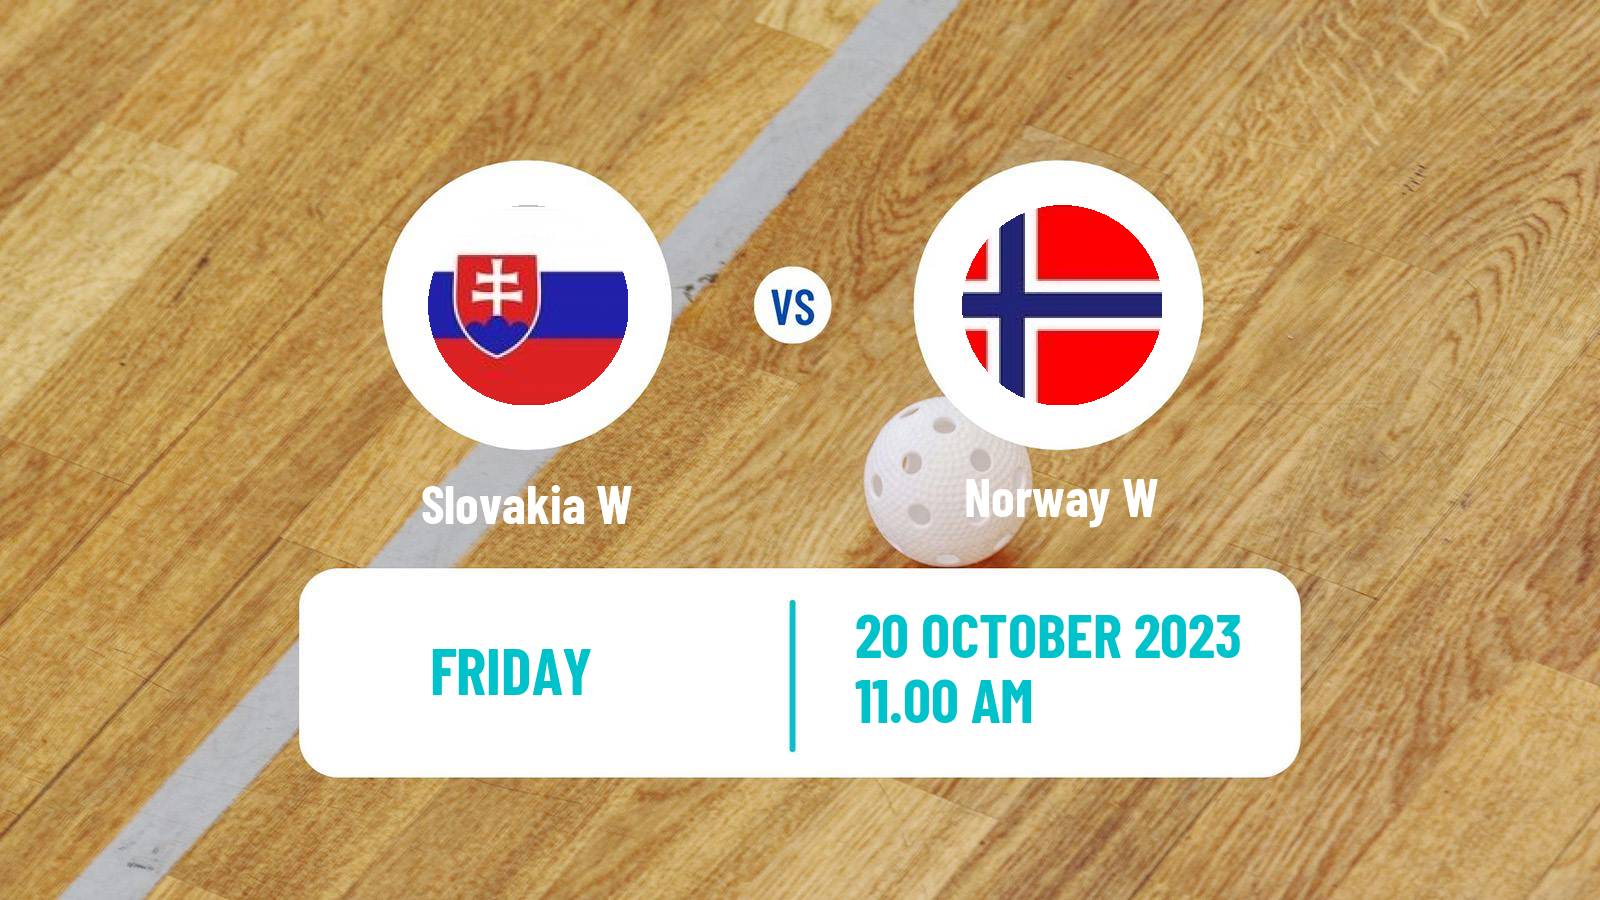 Floorball Friendly International Floorball Women Slovakia W - Norway W